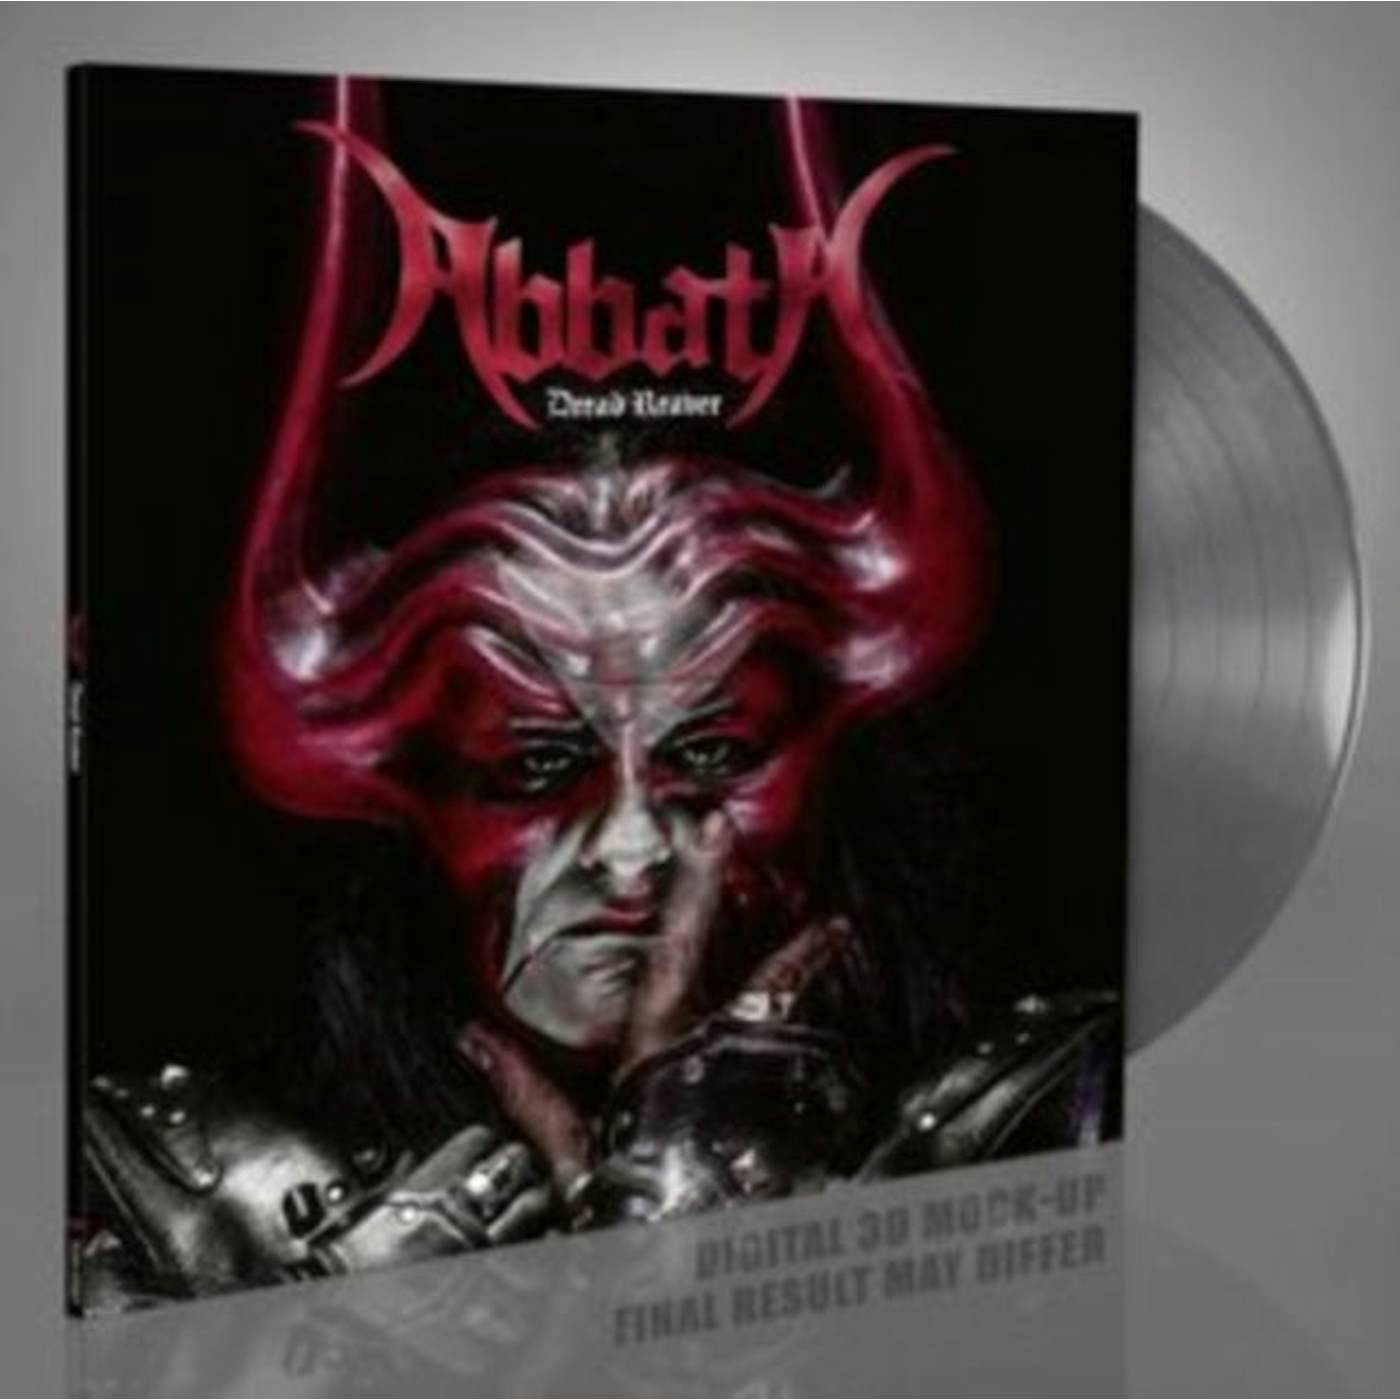 Abbath LP - Dread Reaver (Silver Vinyl)